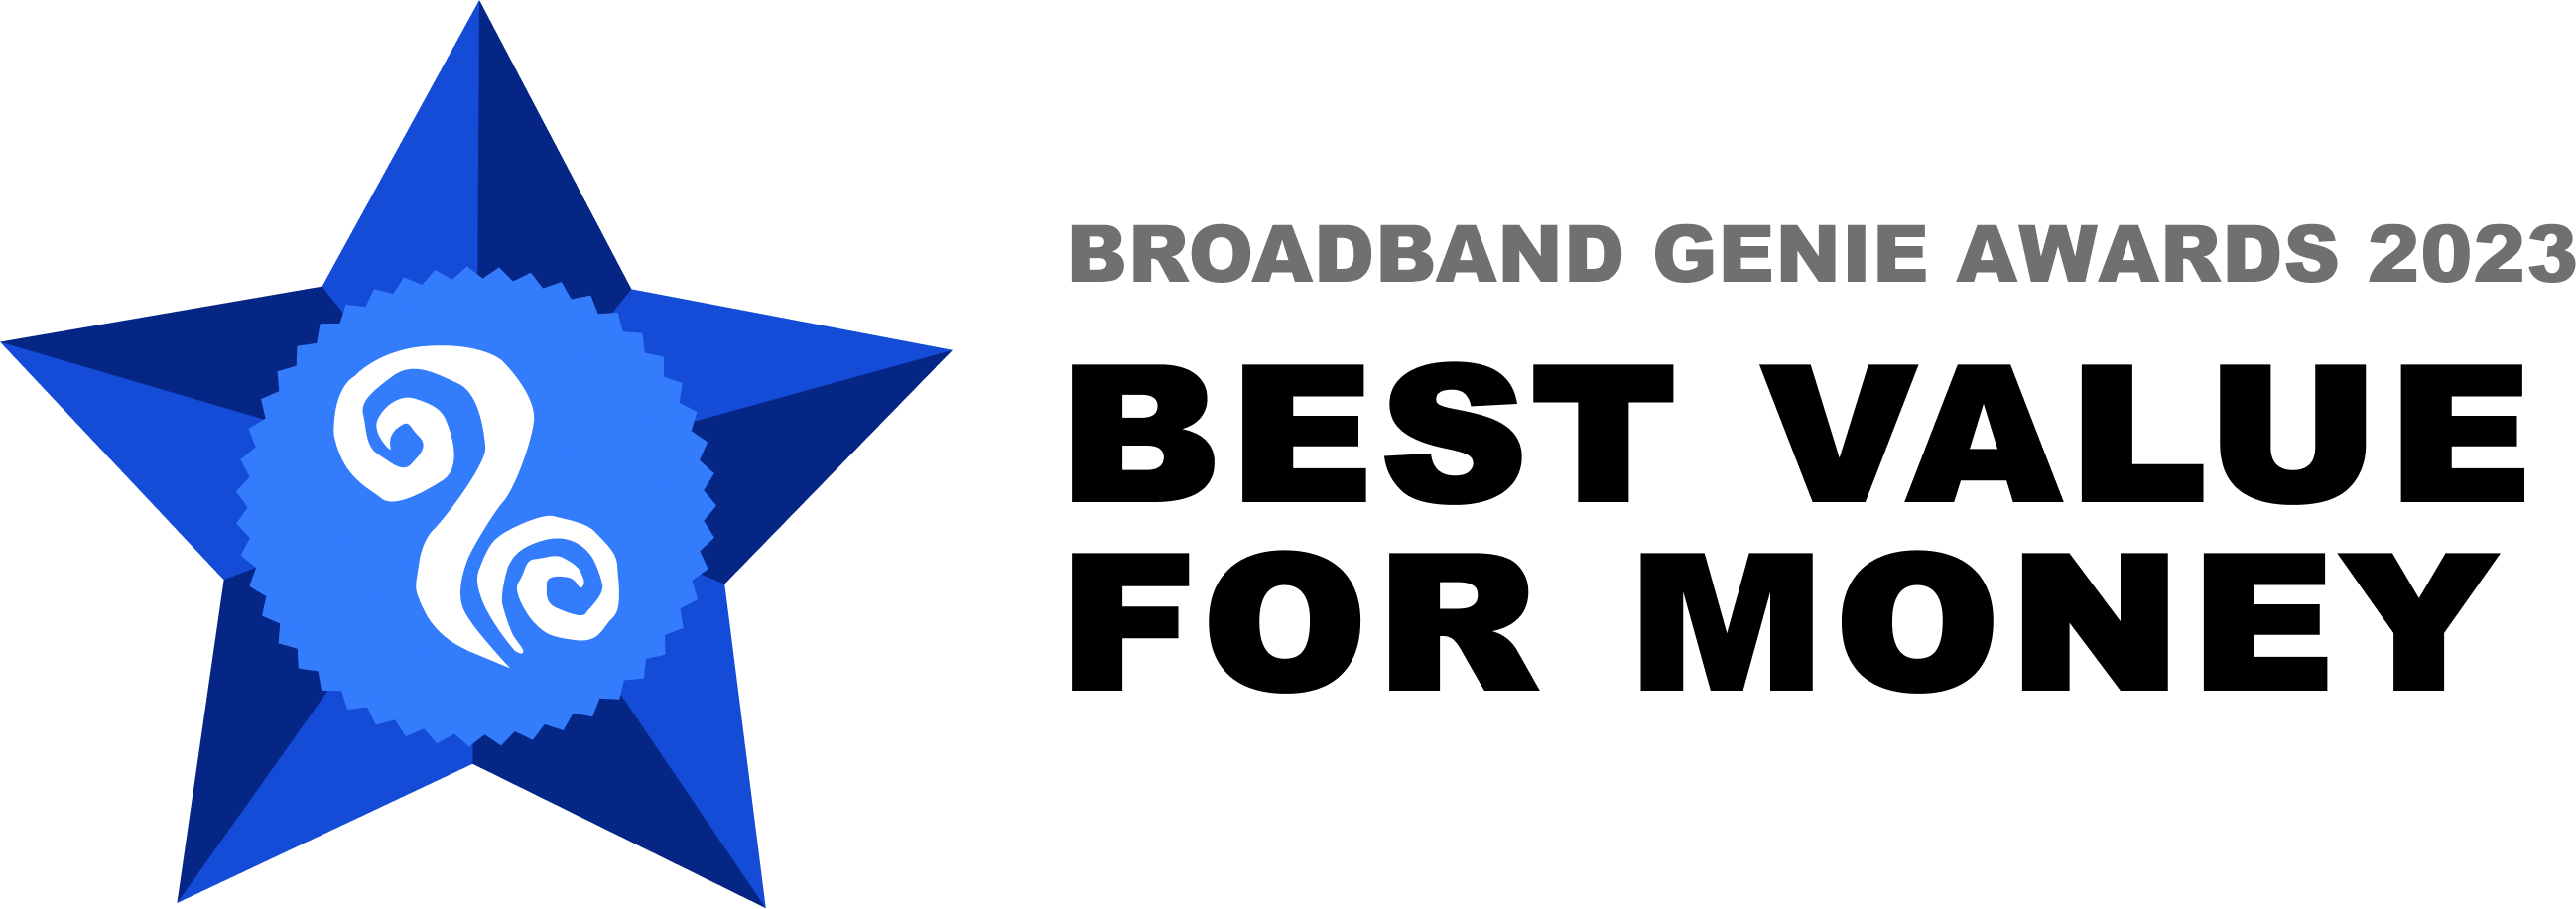 Broadband genie awards 2023, best value for money